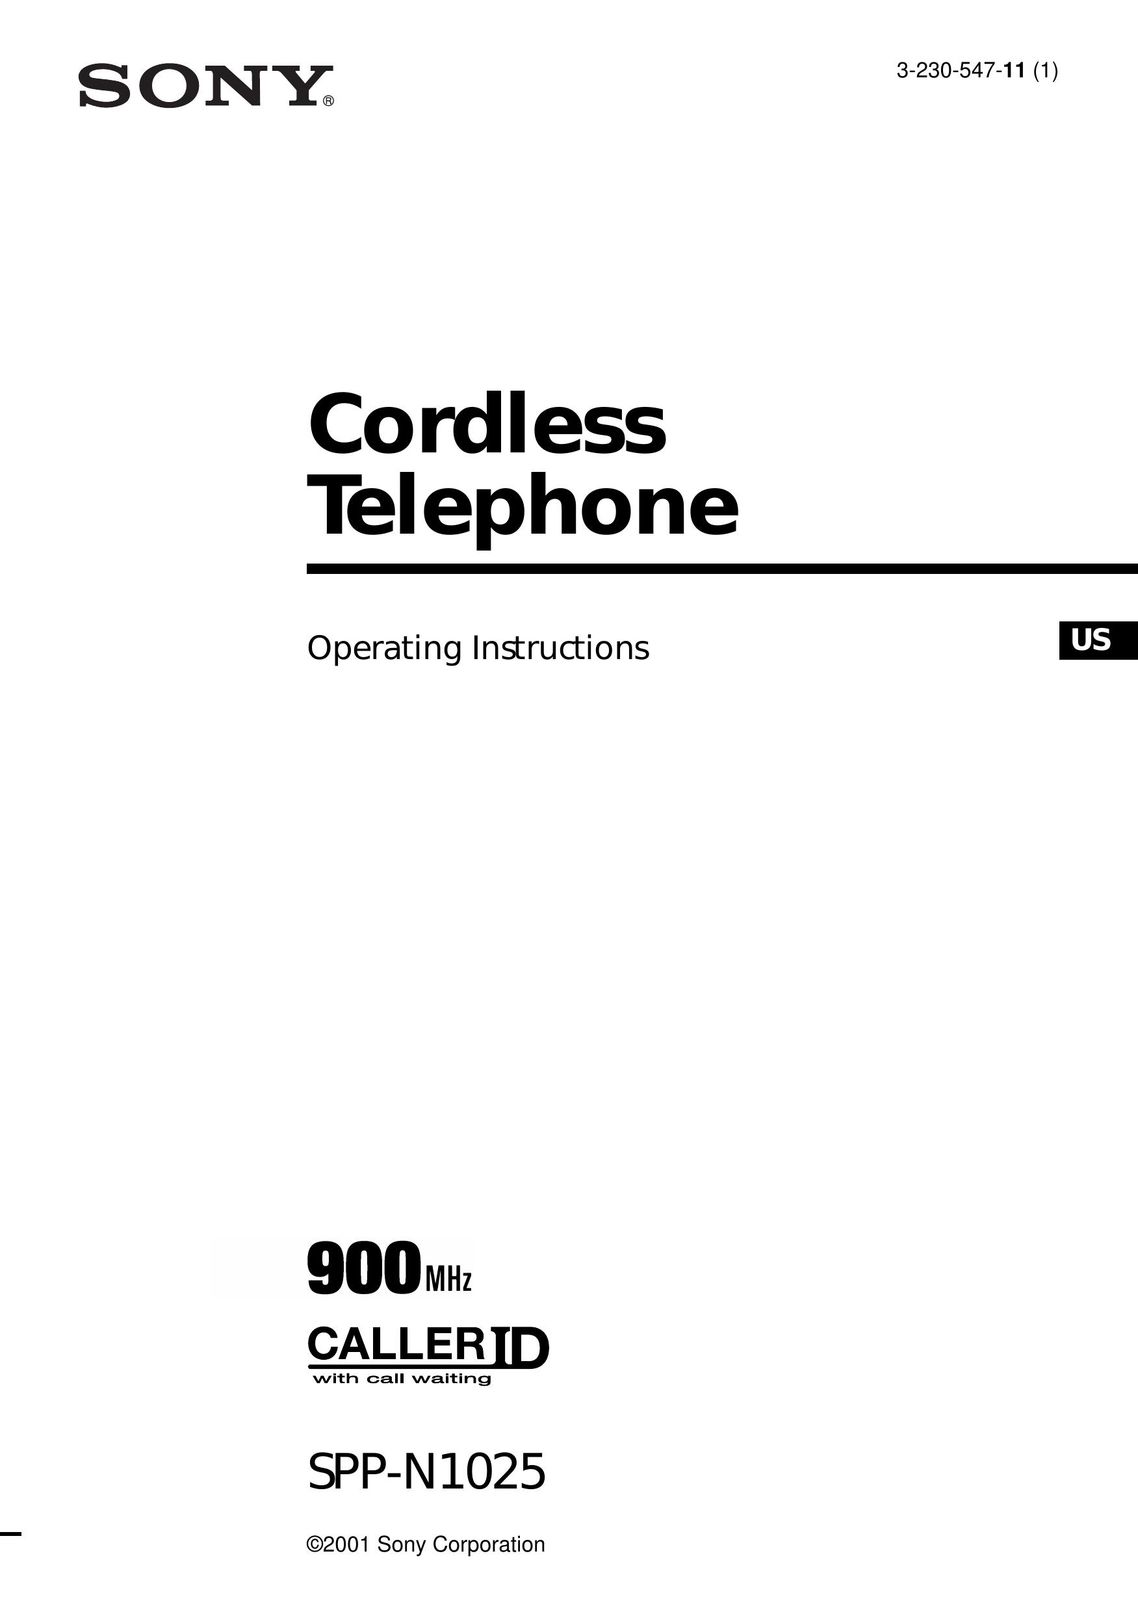 Sony spp-n1025 Cordless Telephone User Manual